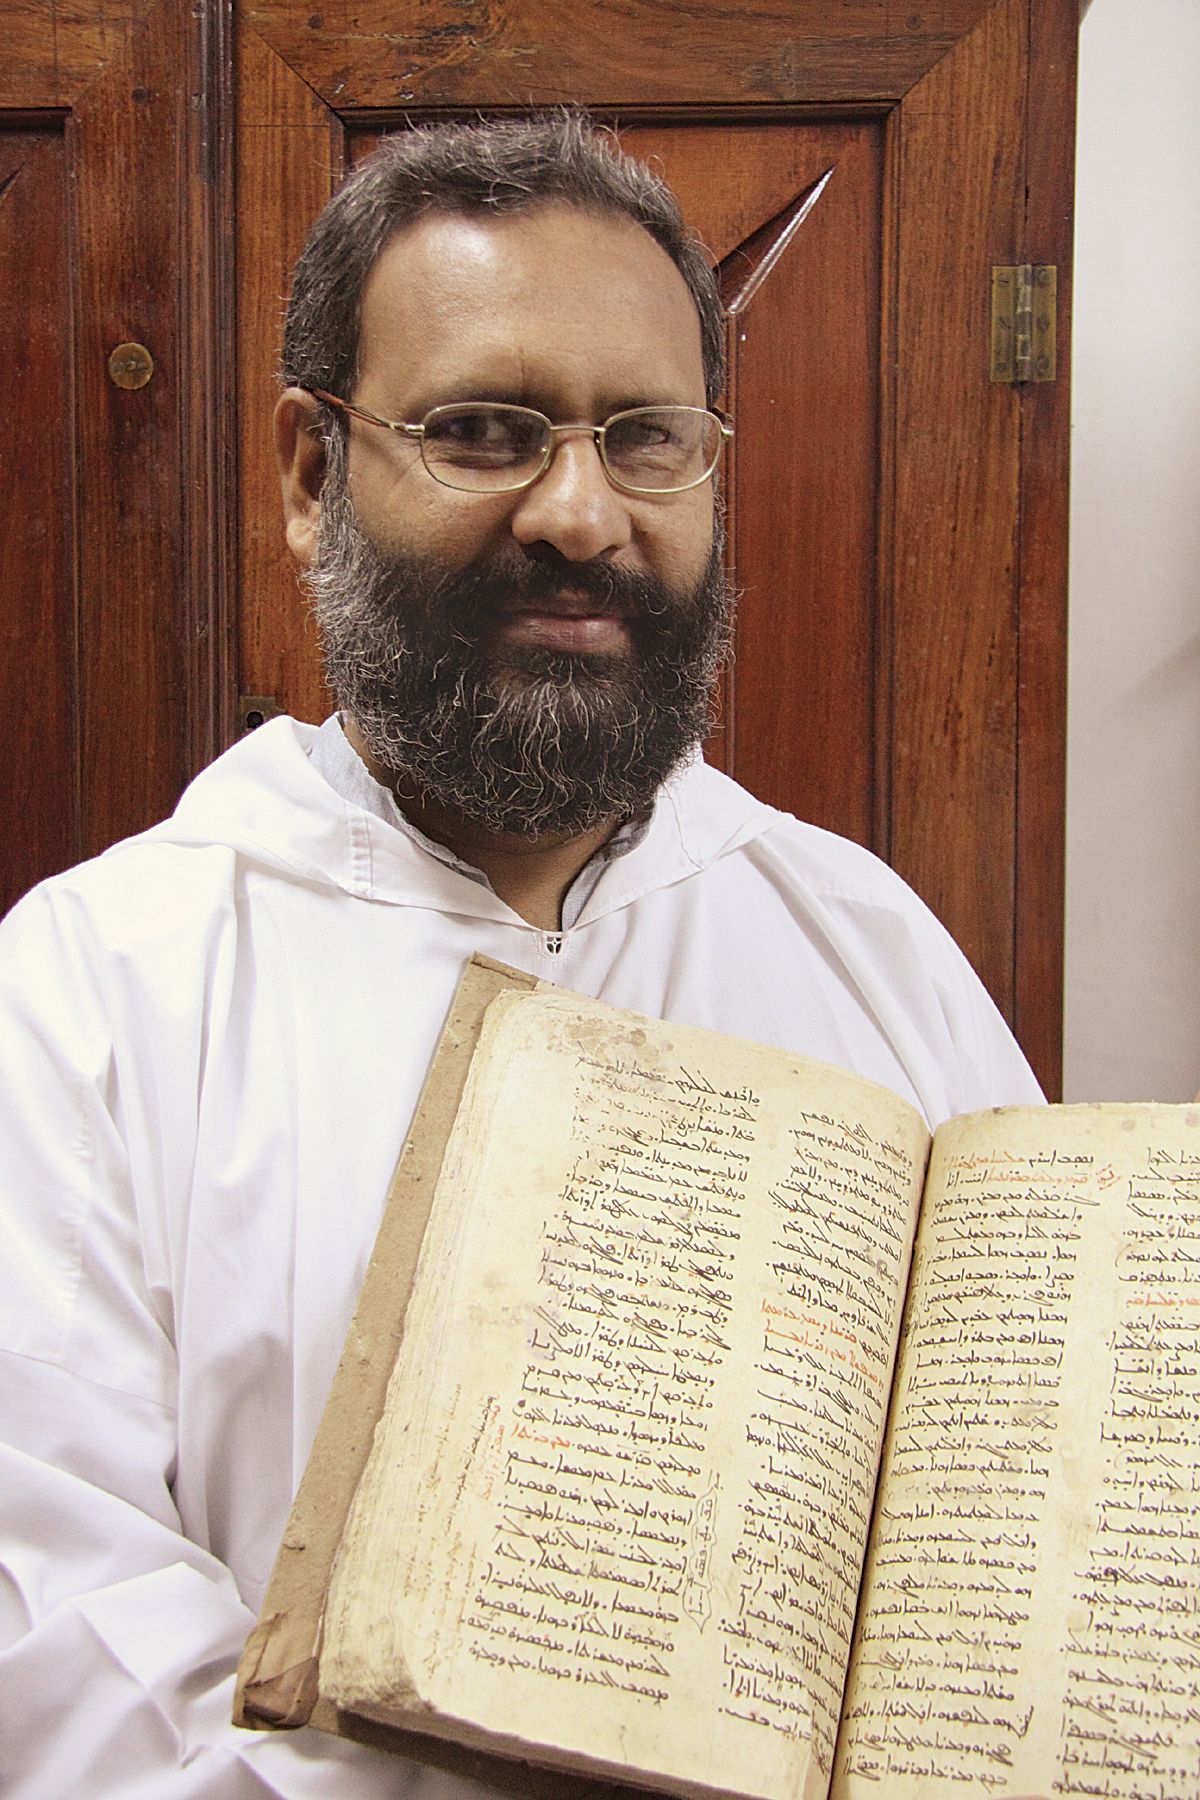 Fr. Johns Abraham Konat, a Malankara Orthodox Syriac priest, holds a family Syriac Bible